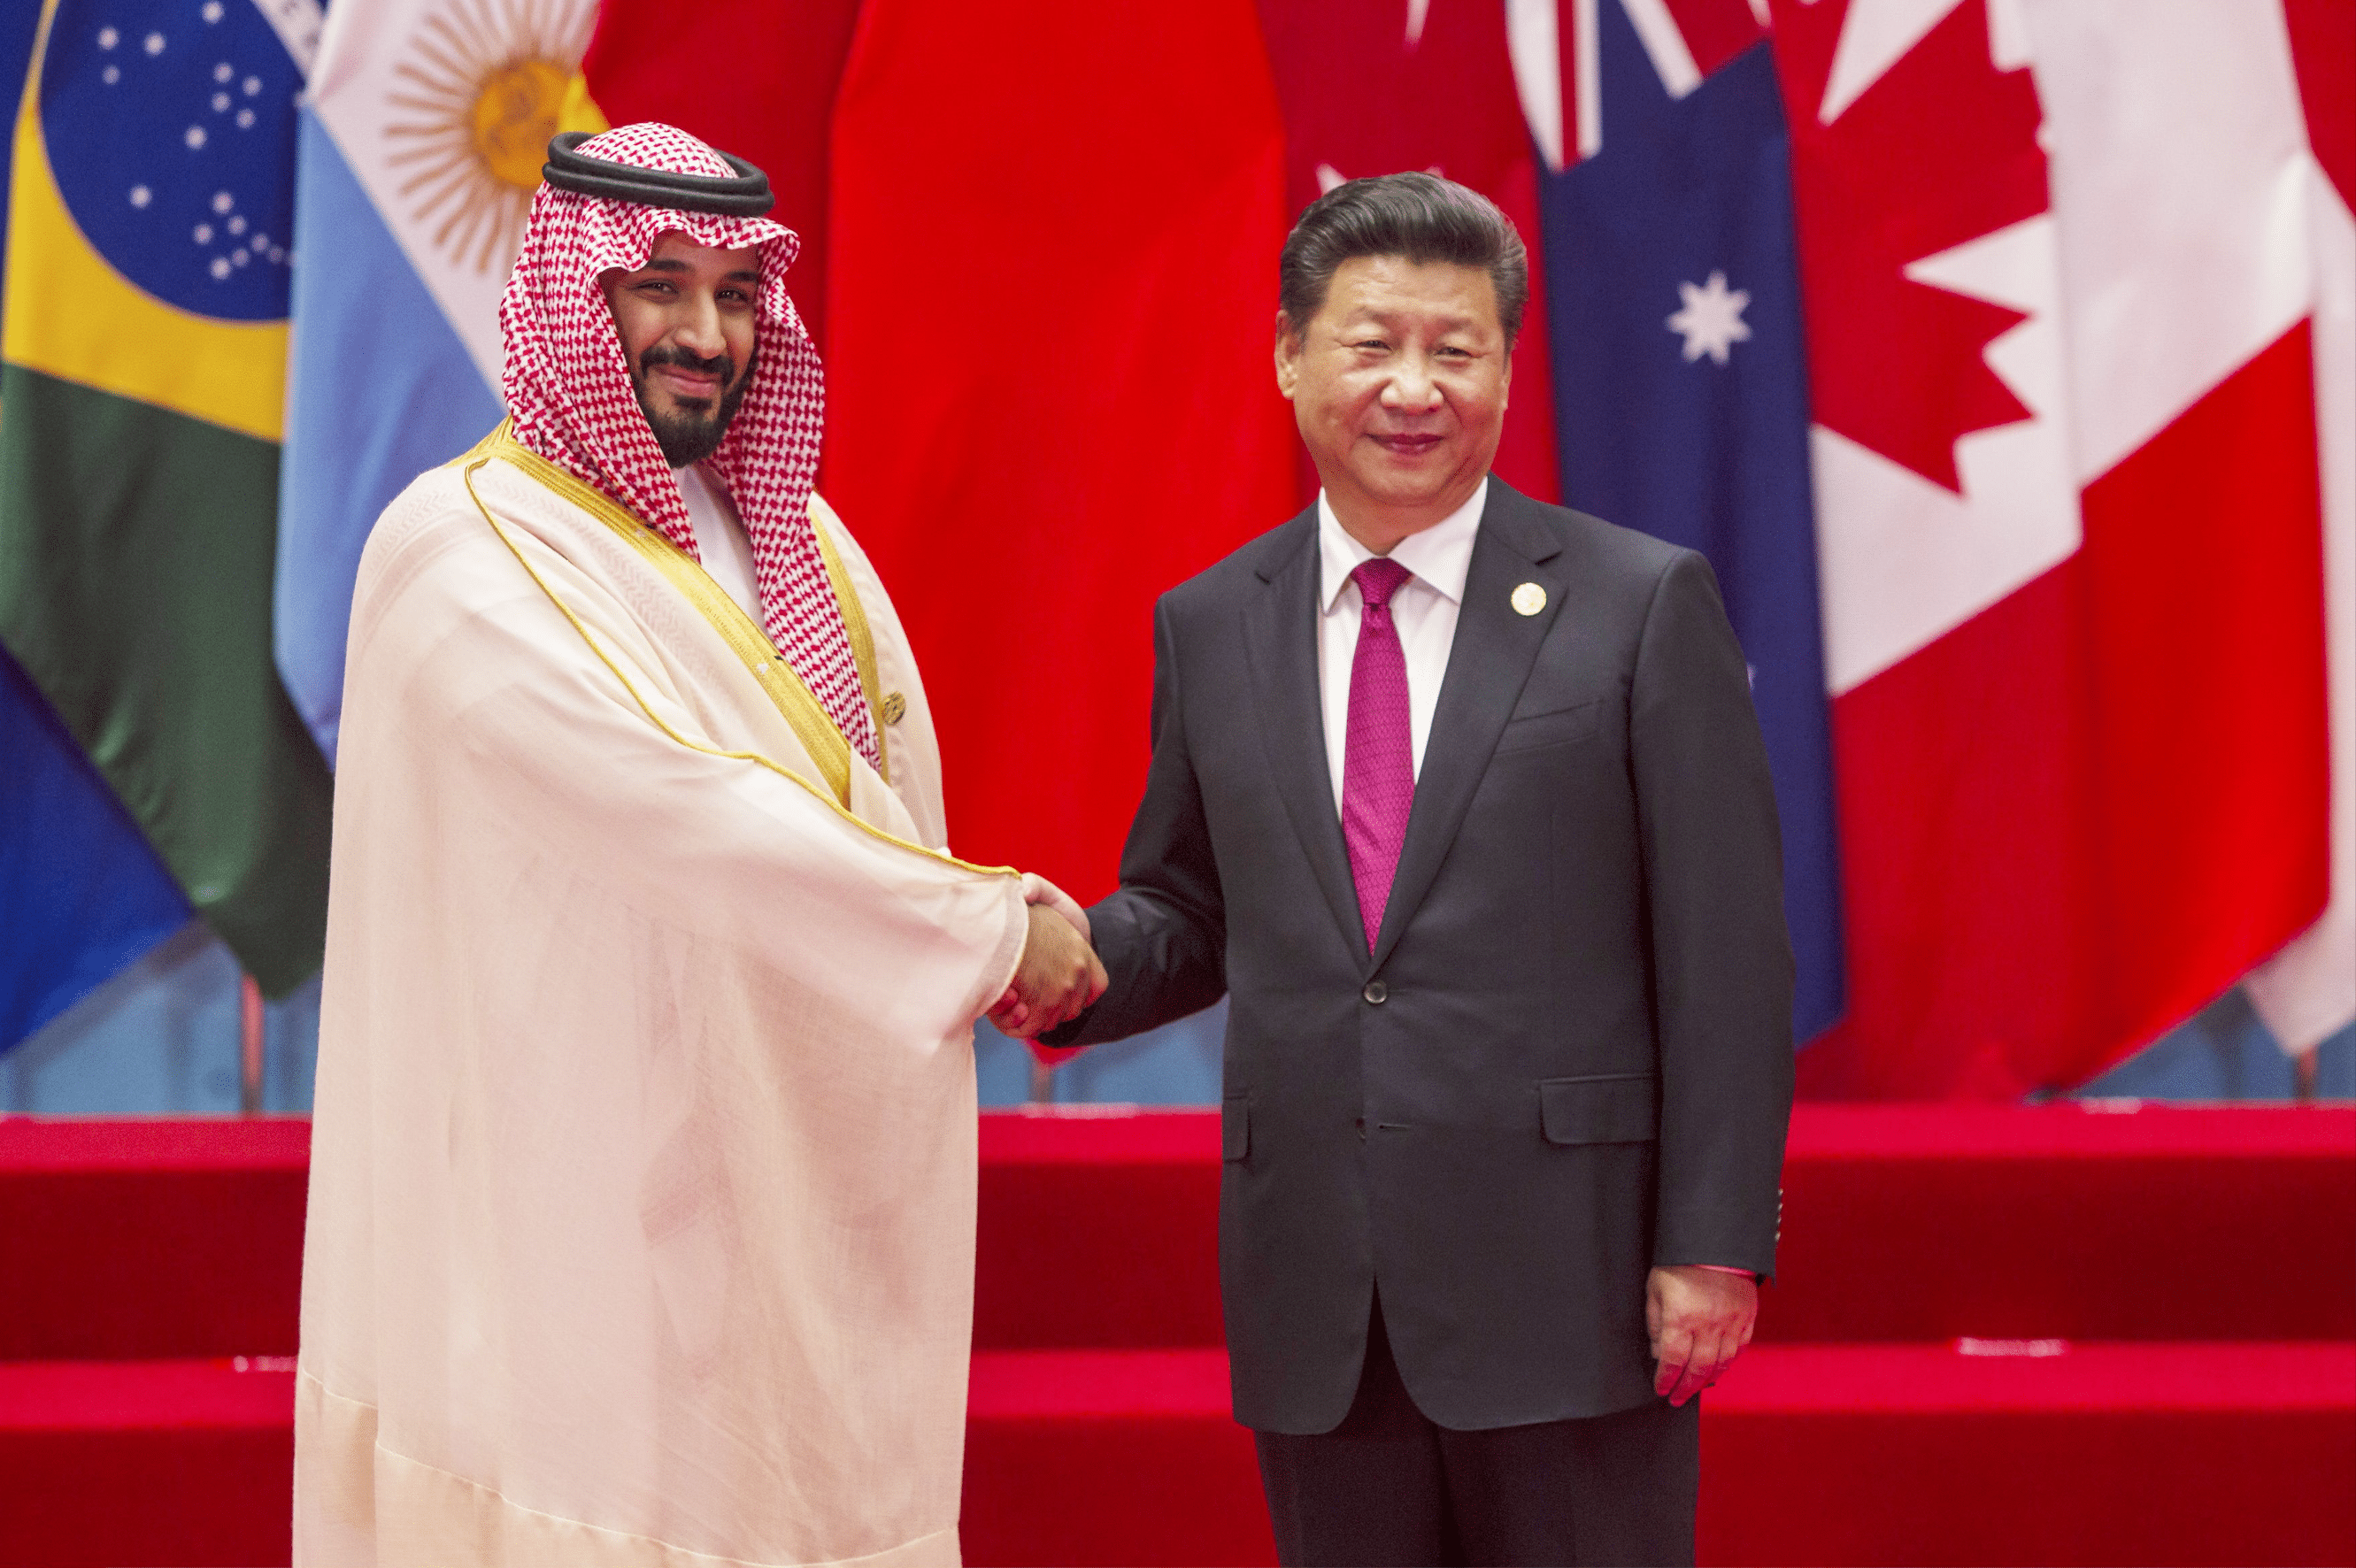 Mohammed bin Salman et Xi Jinping lors du sommet du G20 à Hangzhou en septembre 2016 (c) SIPA 00770307_000020